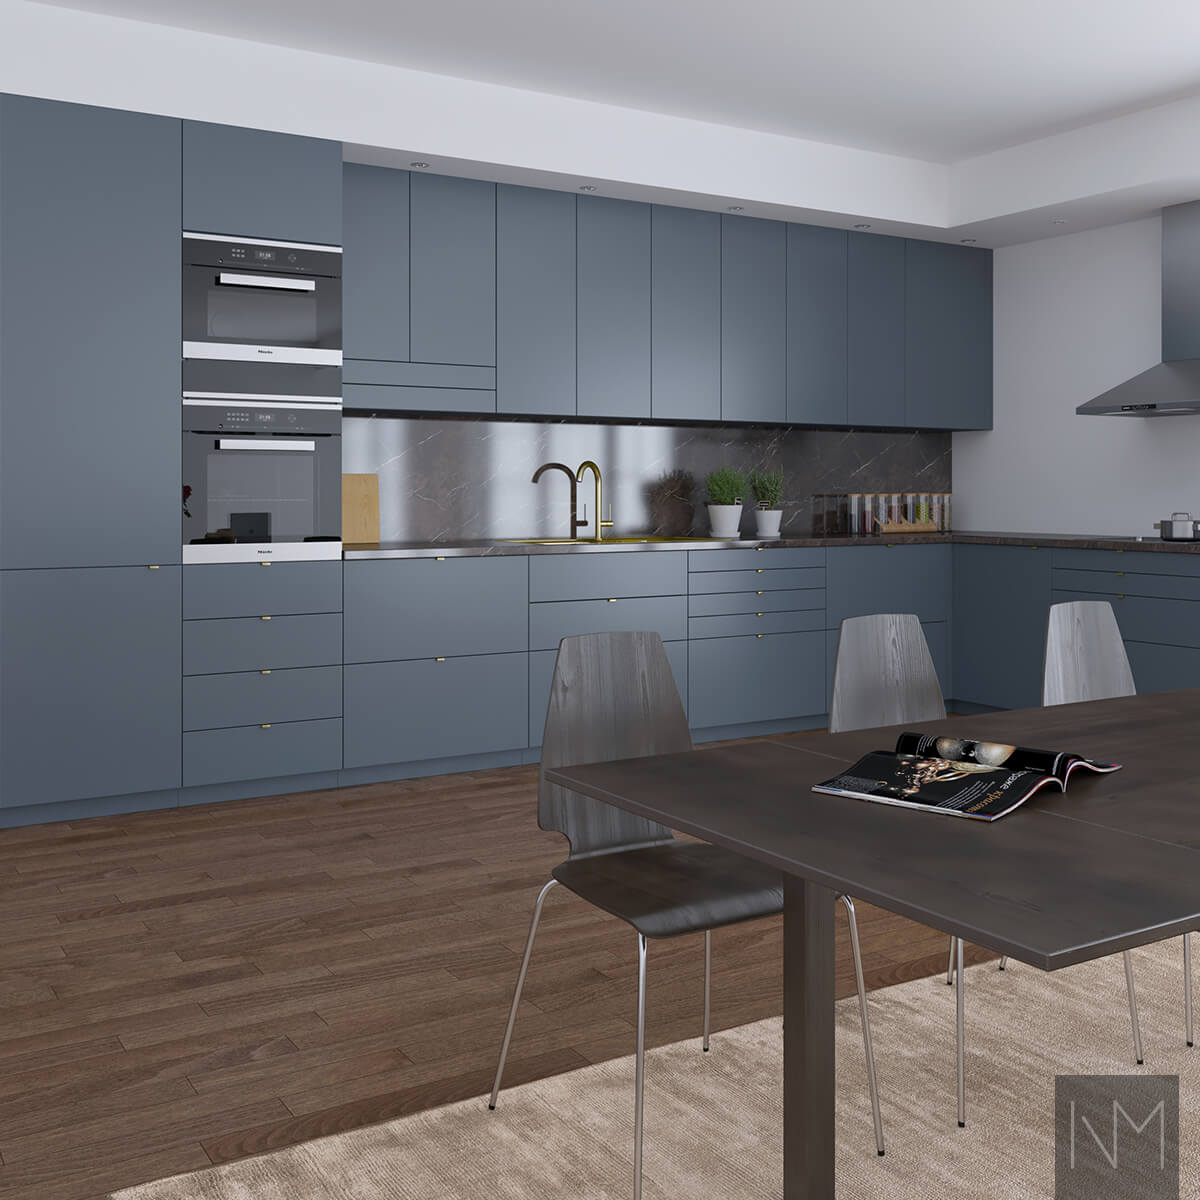 IKEA Metod or Faktum kitchen Basic. Colour NCS S7010-R90B or Jotun Deco Blue 4477.